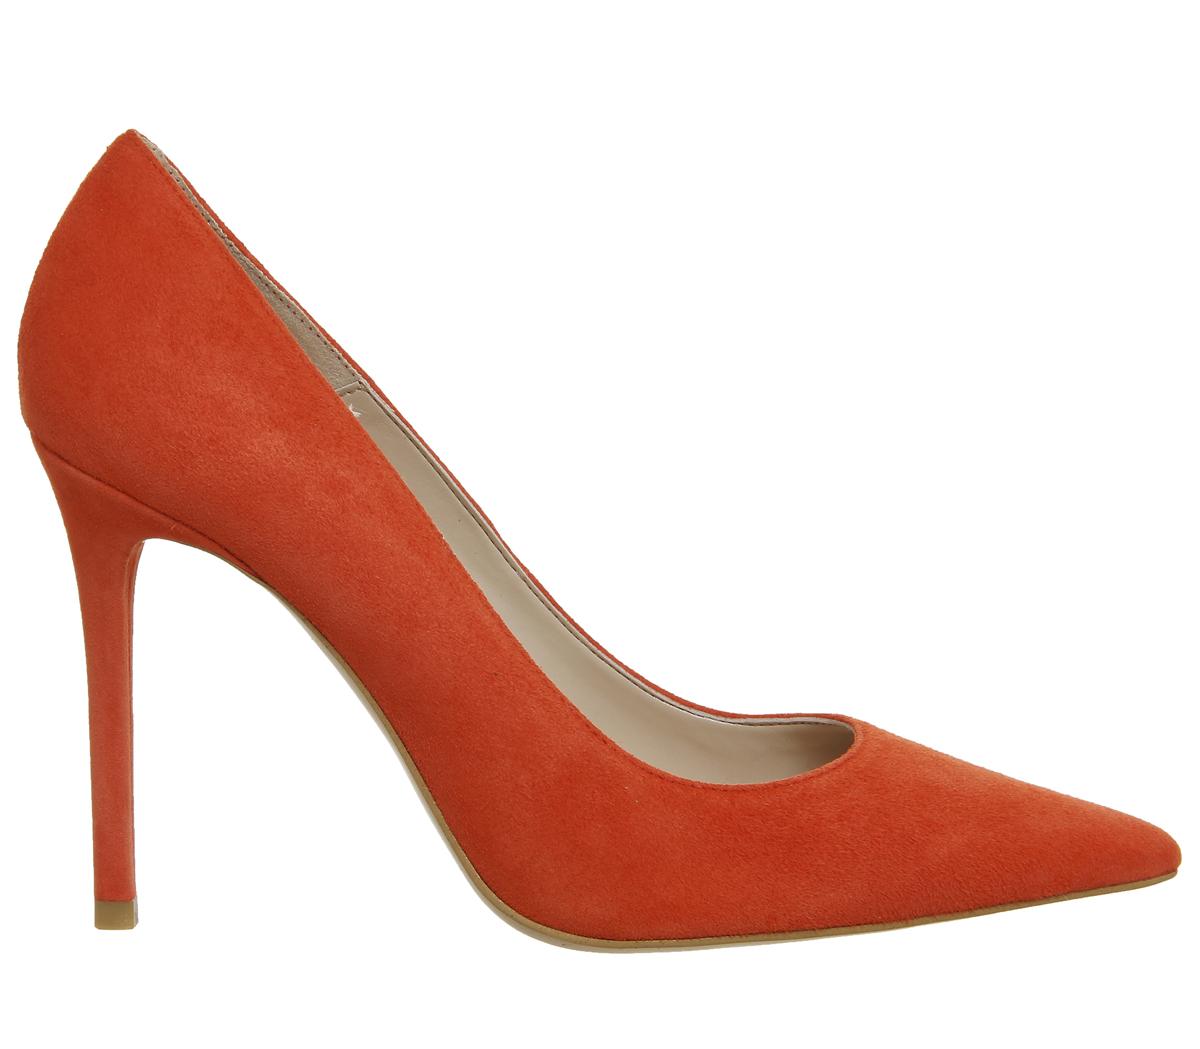 orange suede court shoes